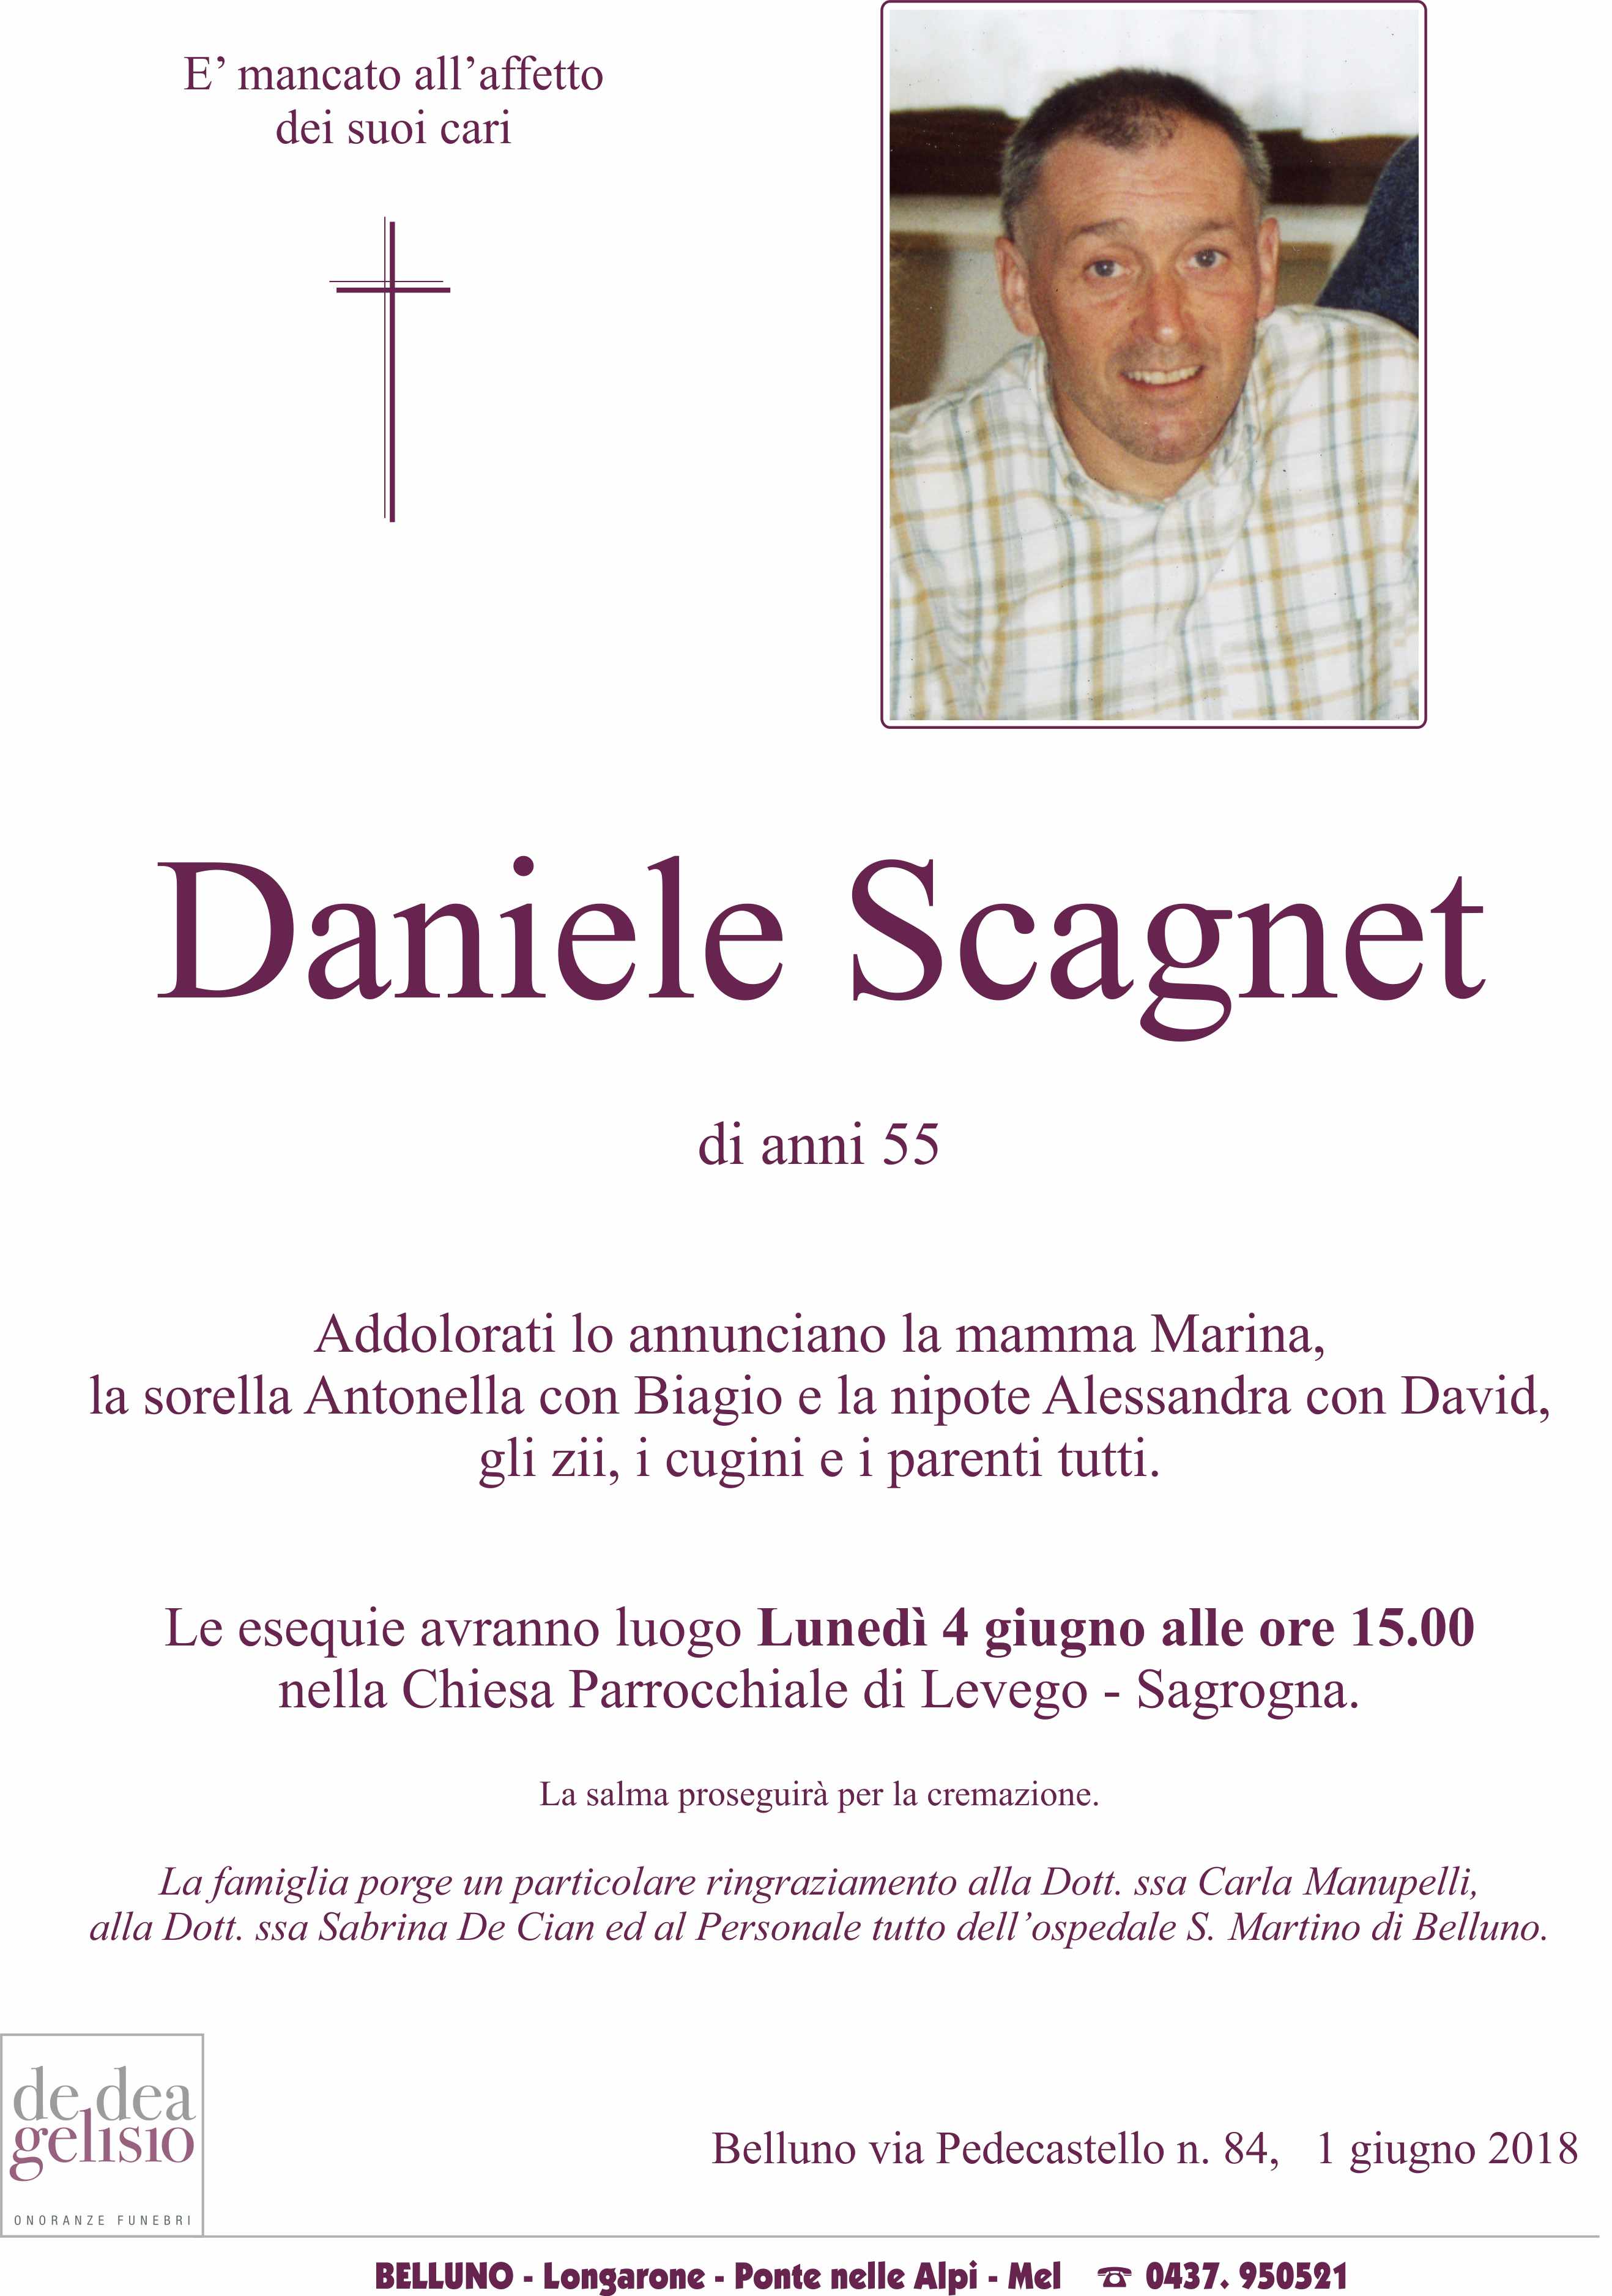 Scagnet Daniele